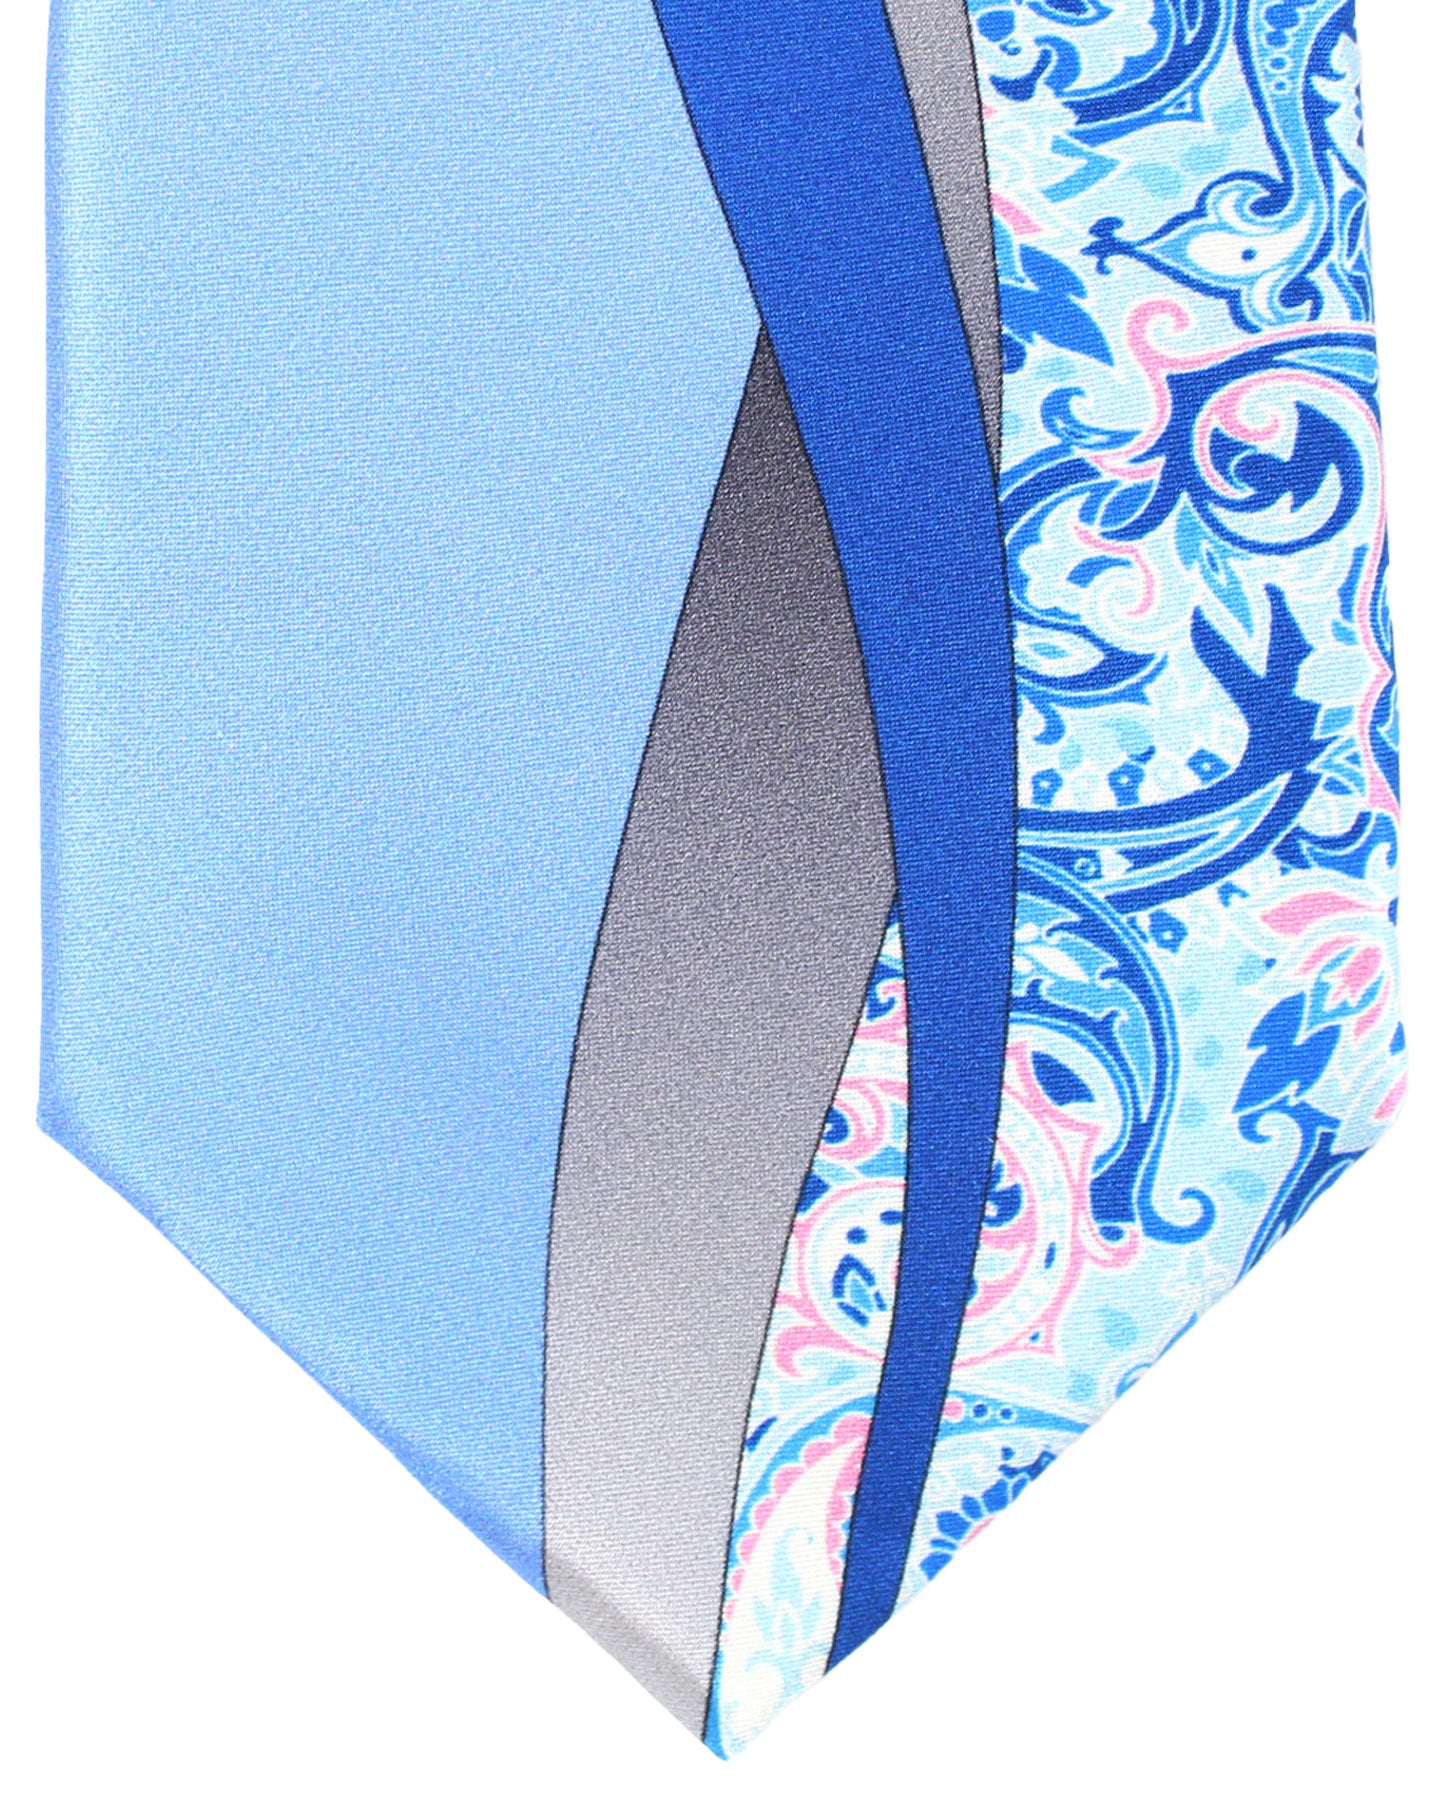 Vitaliano Pancaldi Silk Tie Blue Pink Ornamental Design